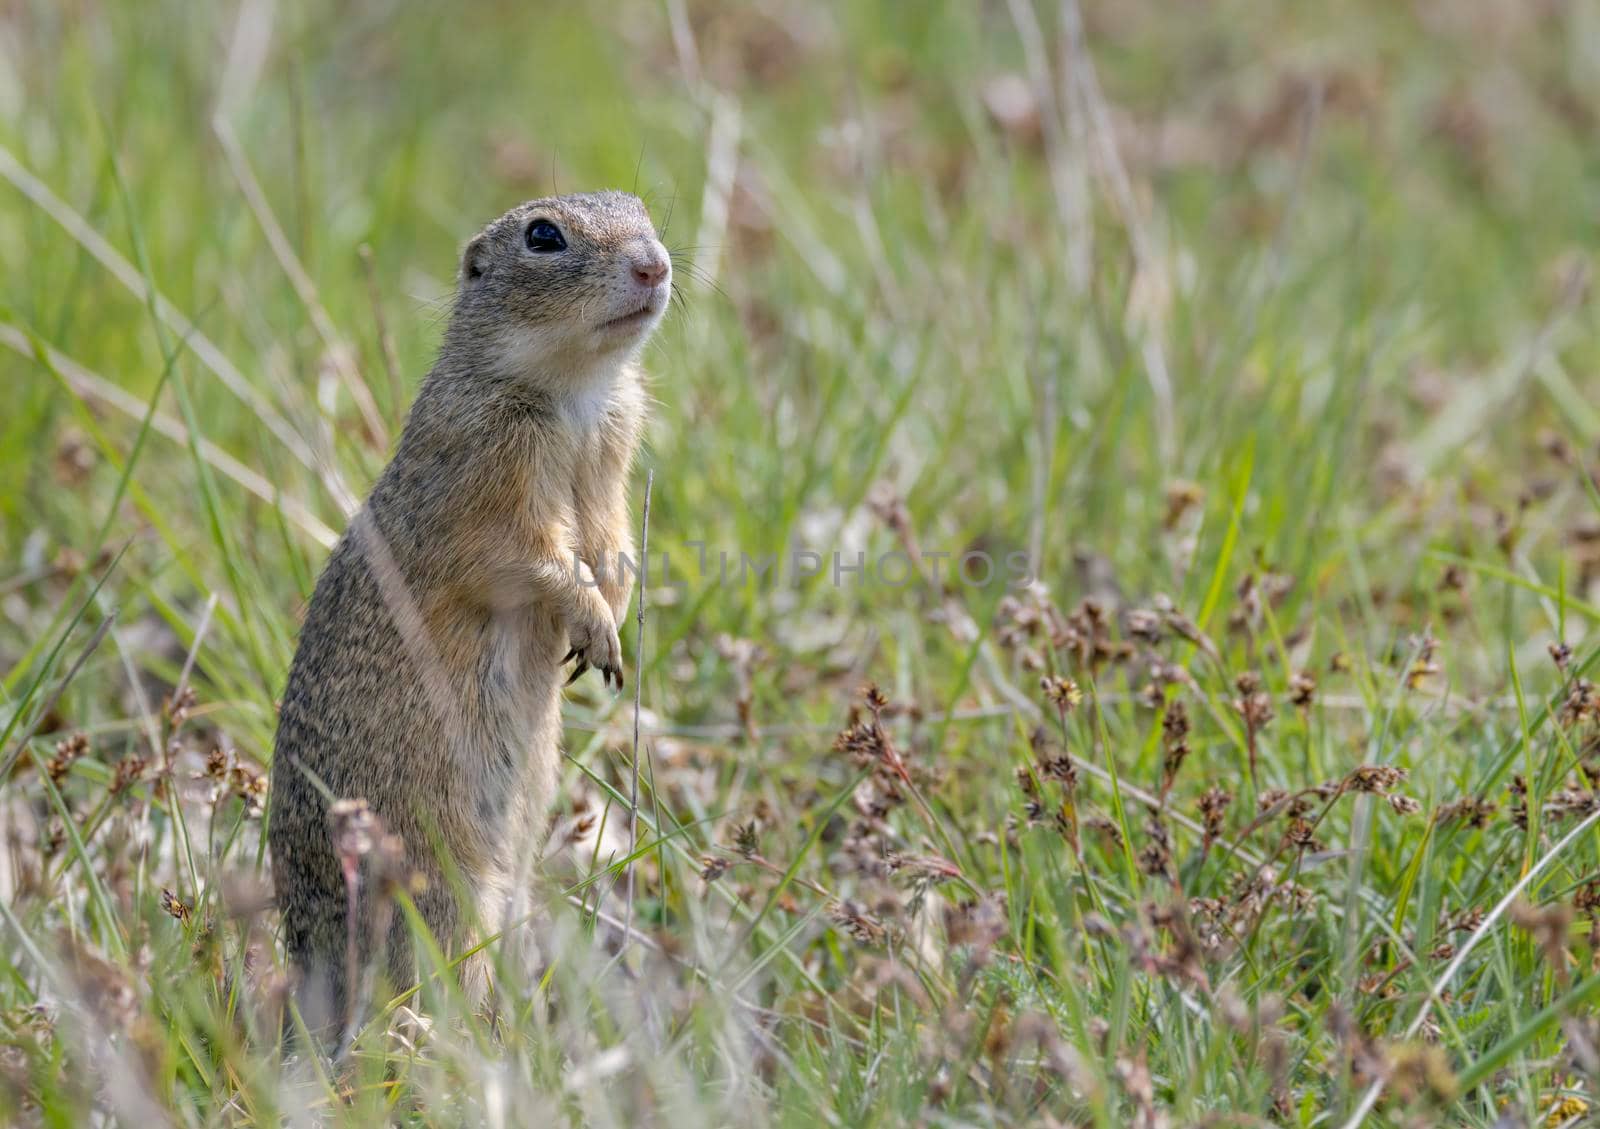 Ground squirrel colony, national natural monuments Radouc, Mlada Boleslav, Czech Republic by phbcz